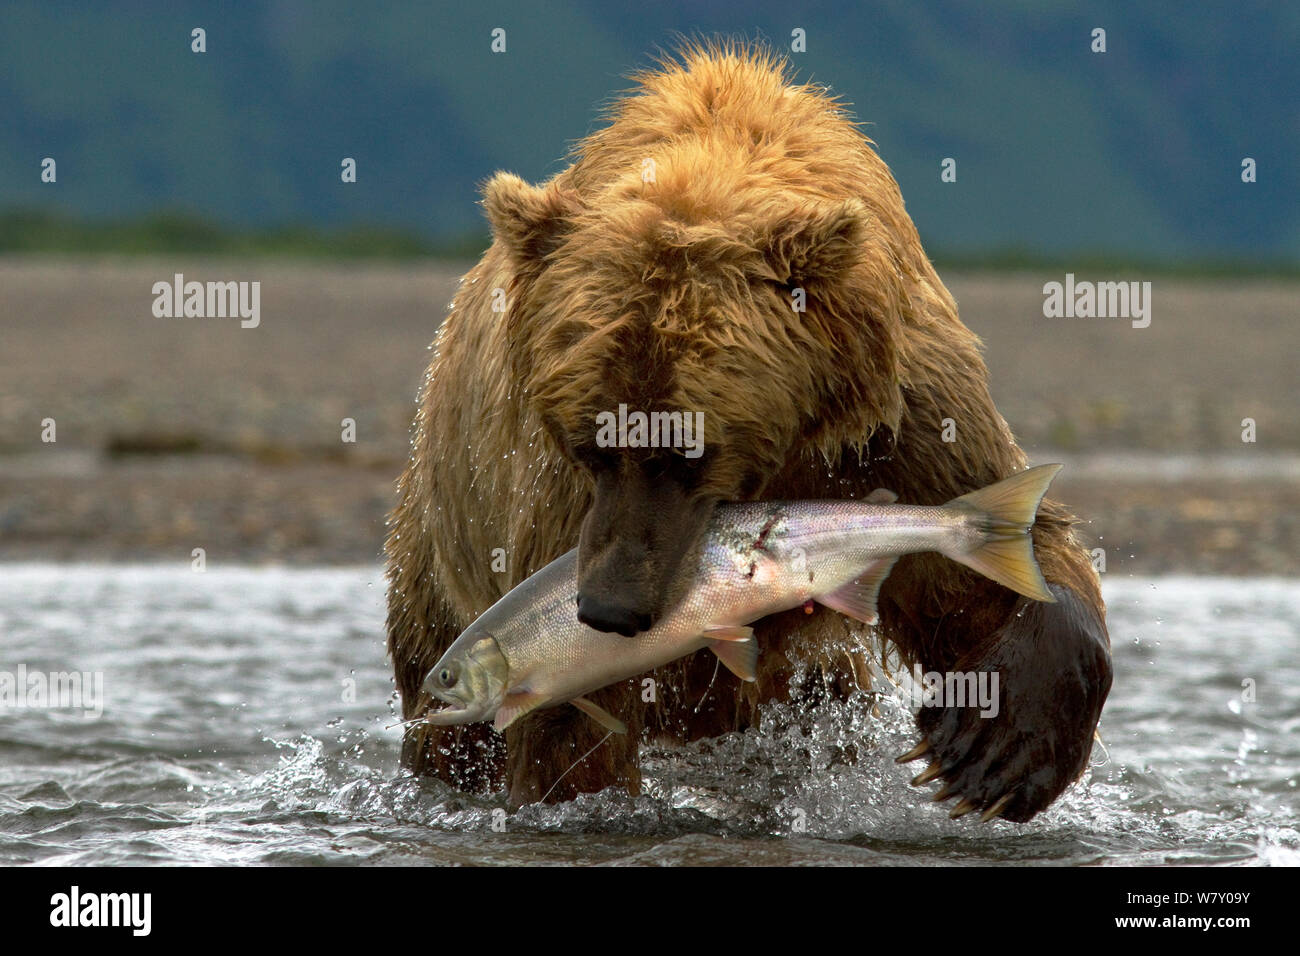 Grizzly bear (Ursus arctos horribilis) carrying Chum salmon (Oncorhynchus keta) Katmai National Park, Alaska, USA, August. Stock Photo